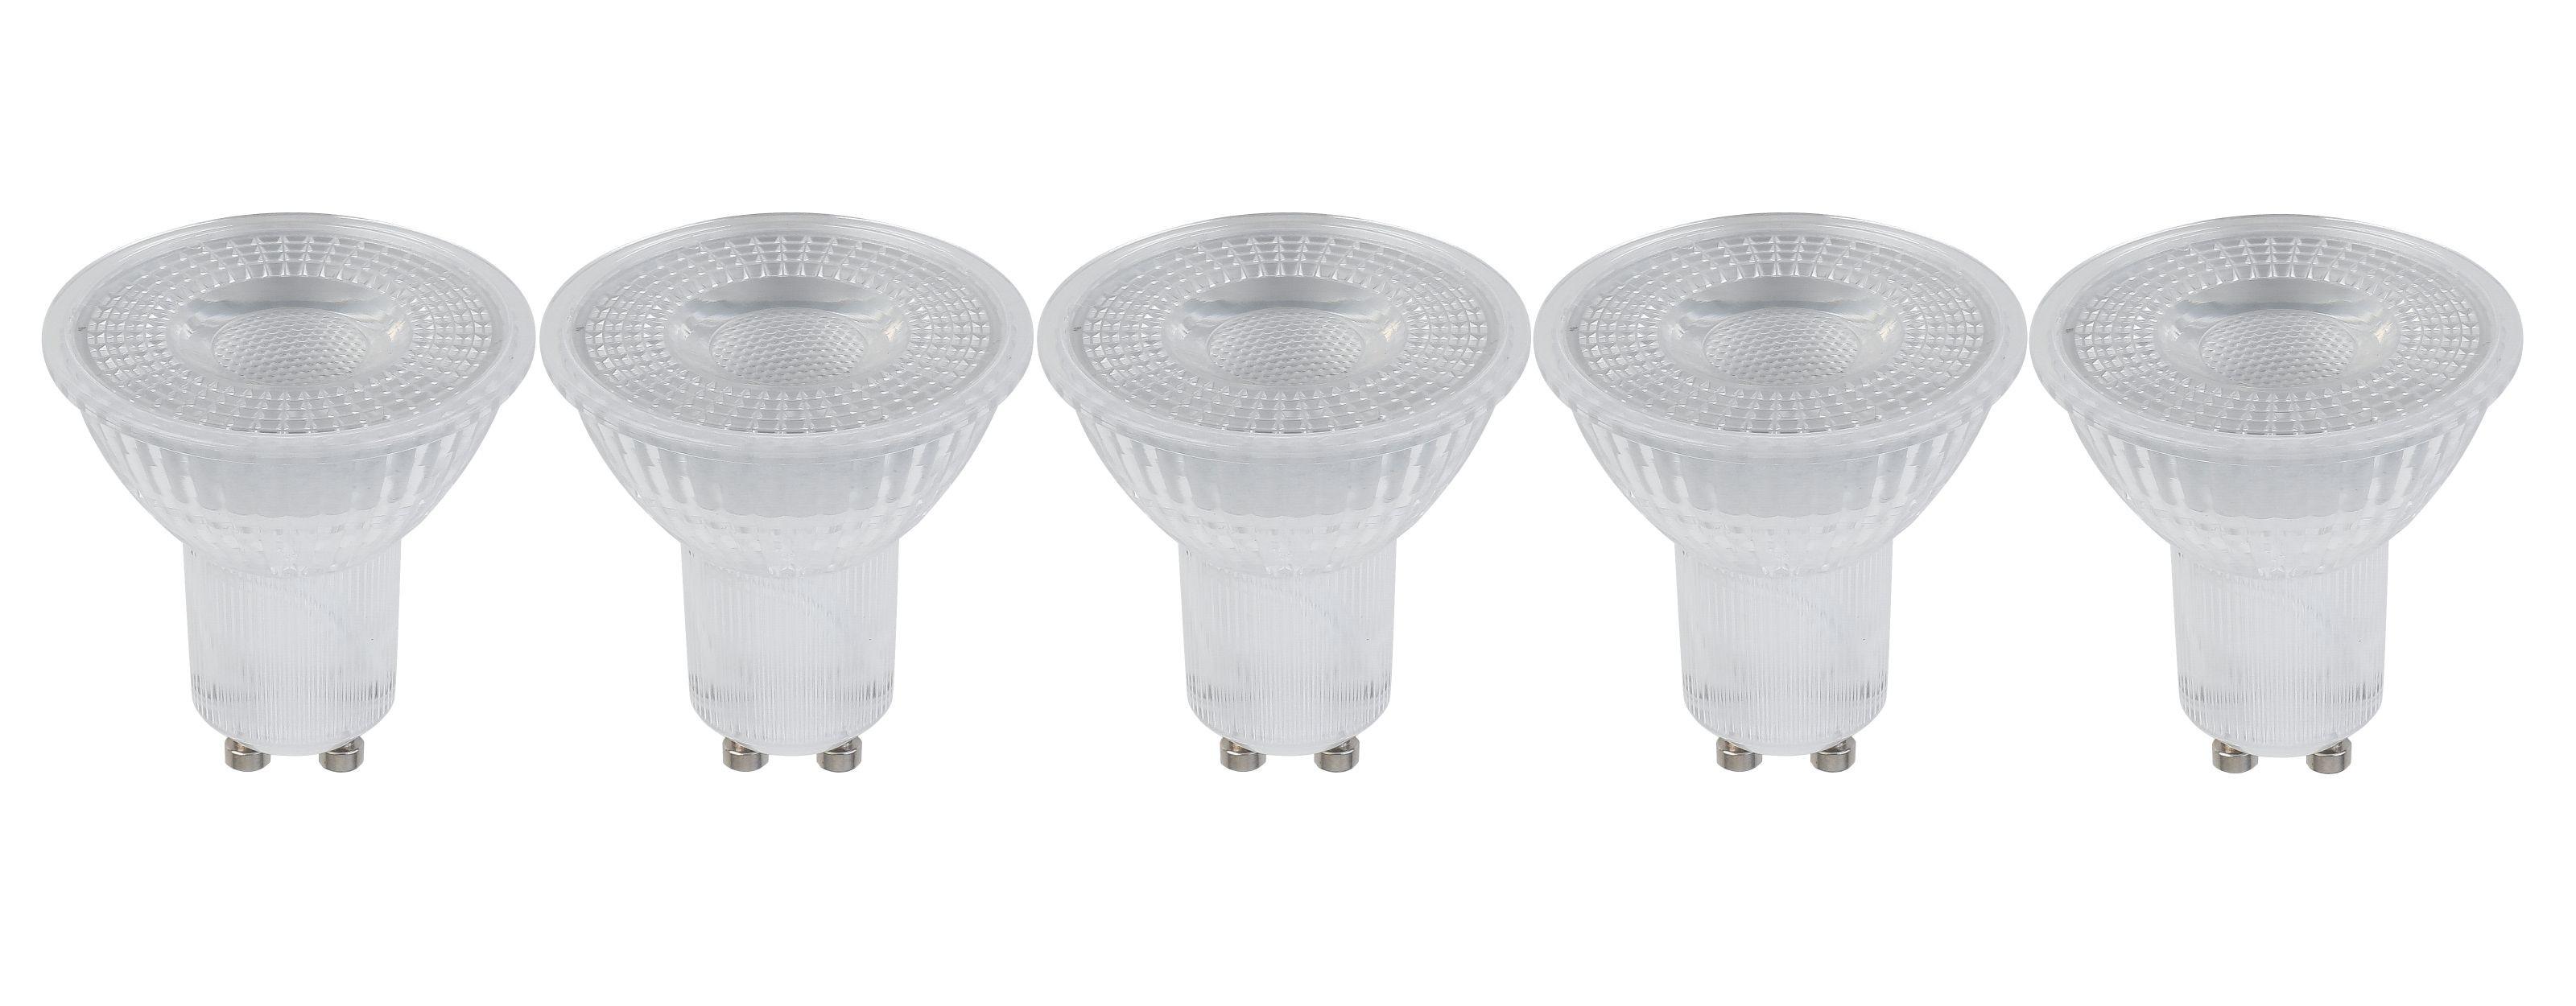 LED-Leuchtmittel C80204-5MM max. 3 Watt - Silberfarben, Kunststoff (5/5,7cm) - Modern Living